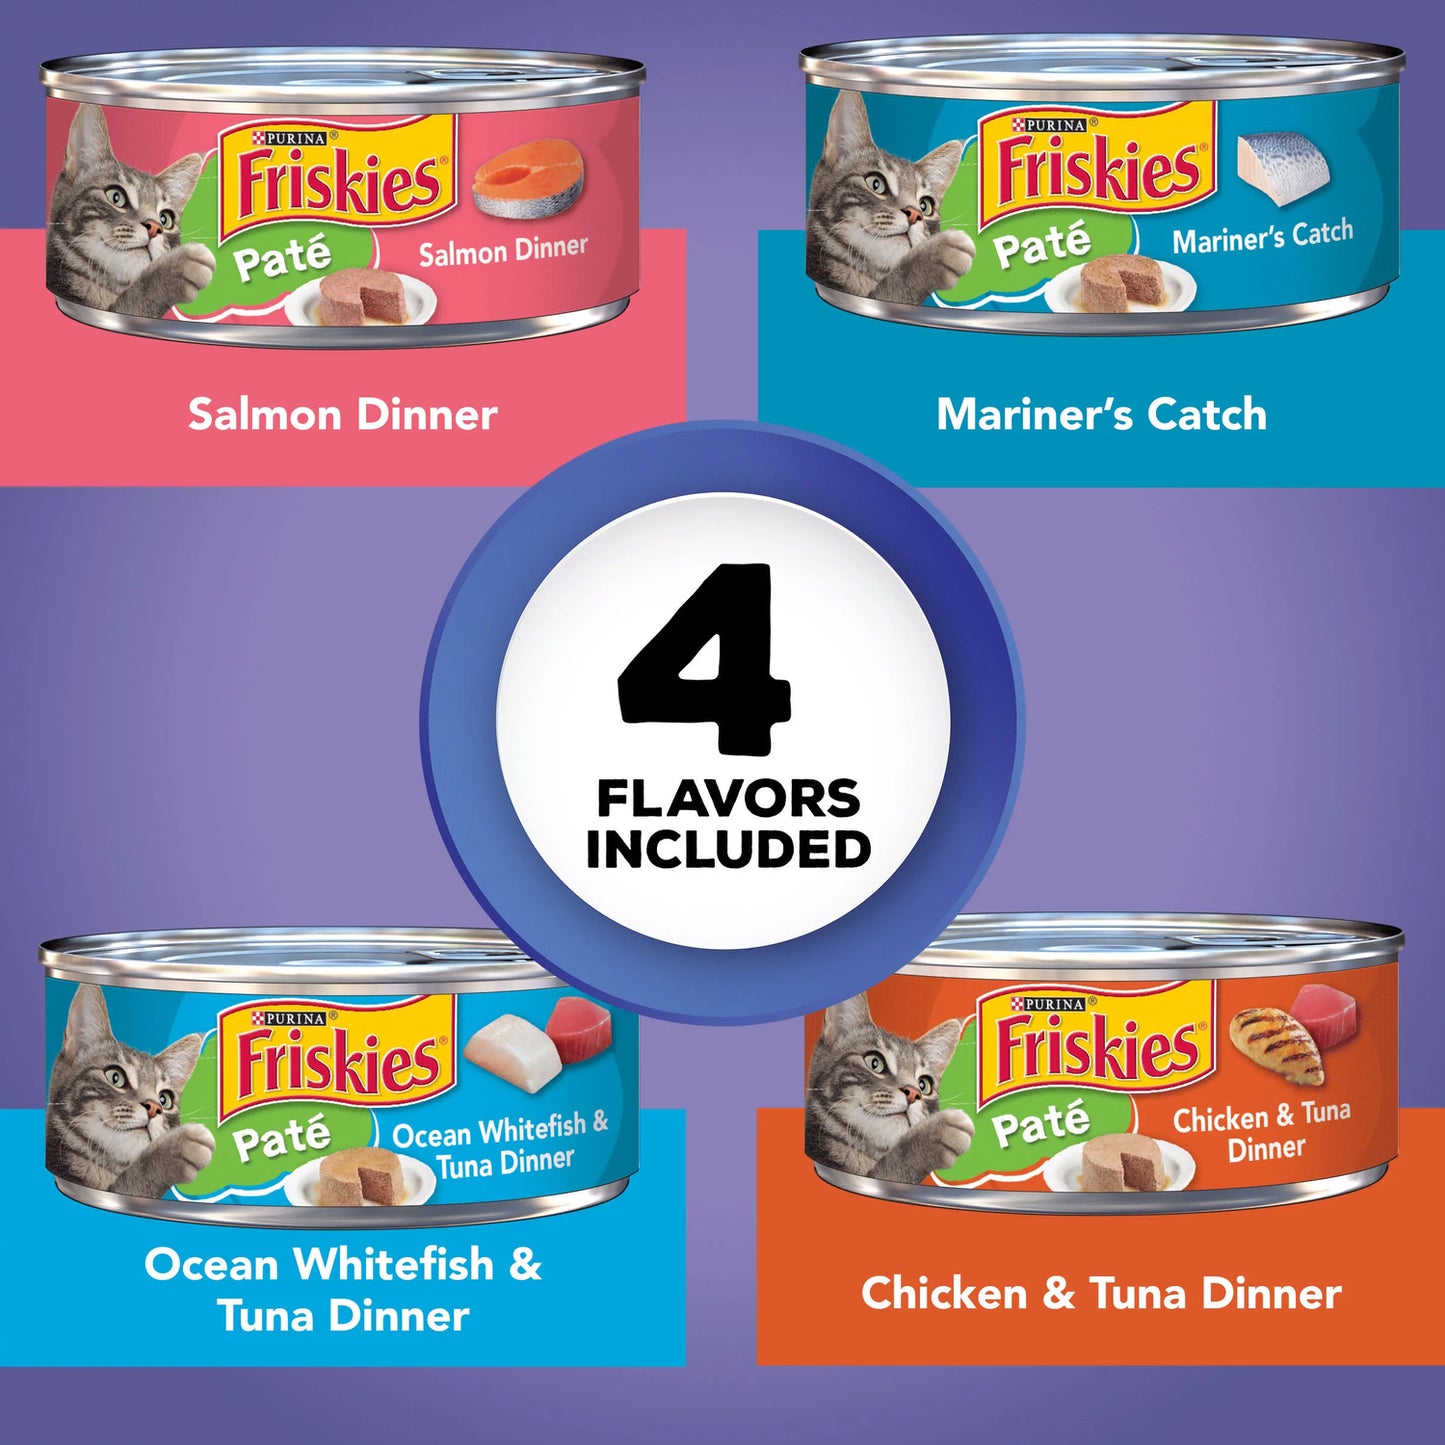 (40 Pack) Friskies Pate Wet Cat Food Variety Pack, Seafood & Chicken Pate Favorites, 5.5 Oz. Cans